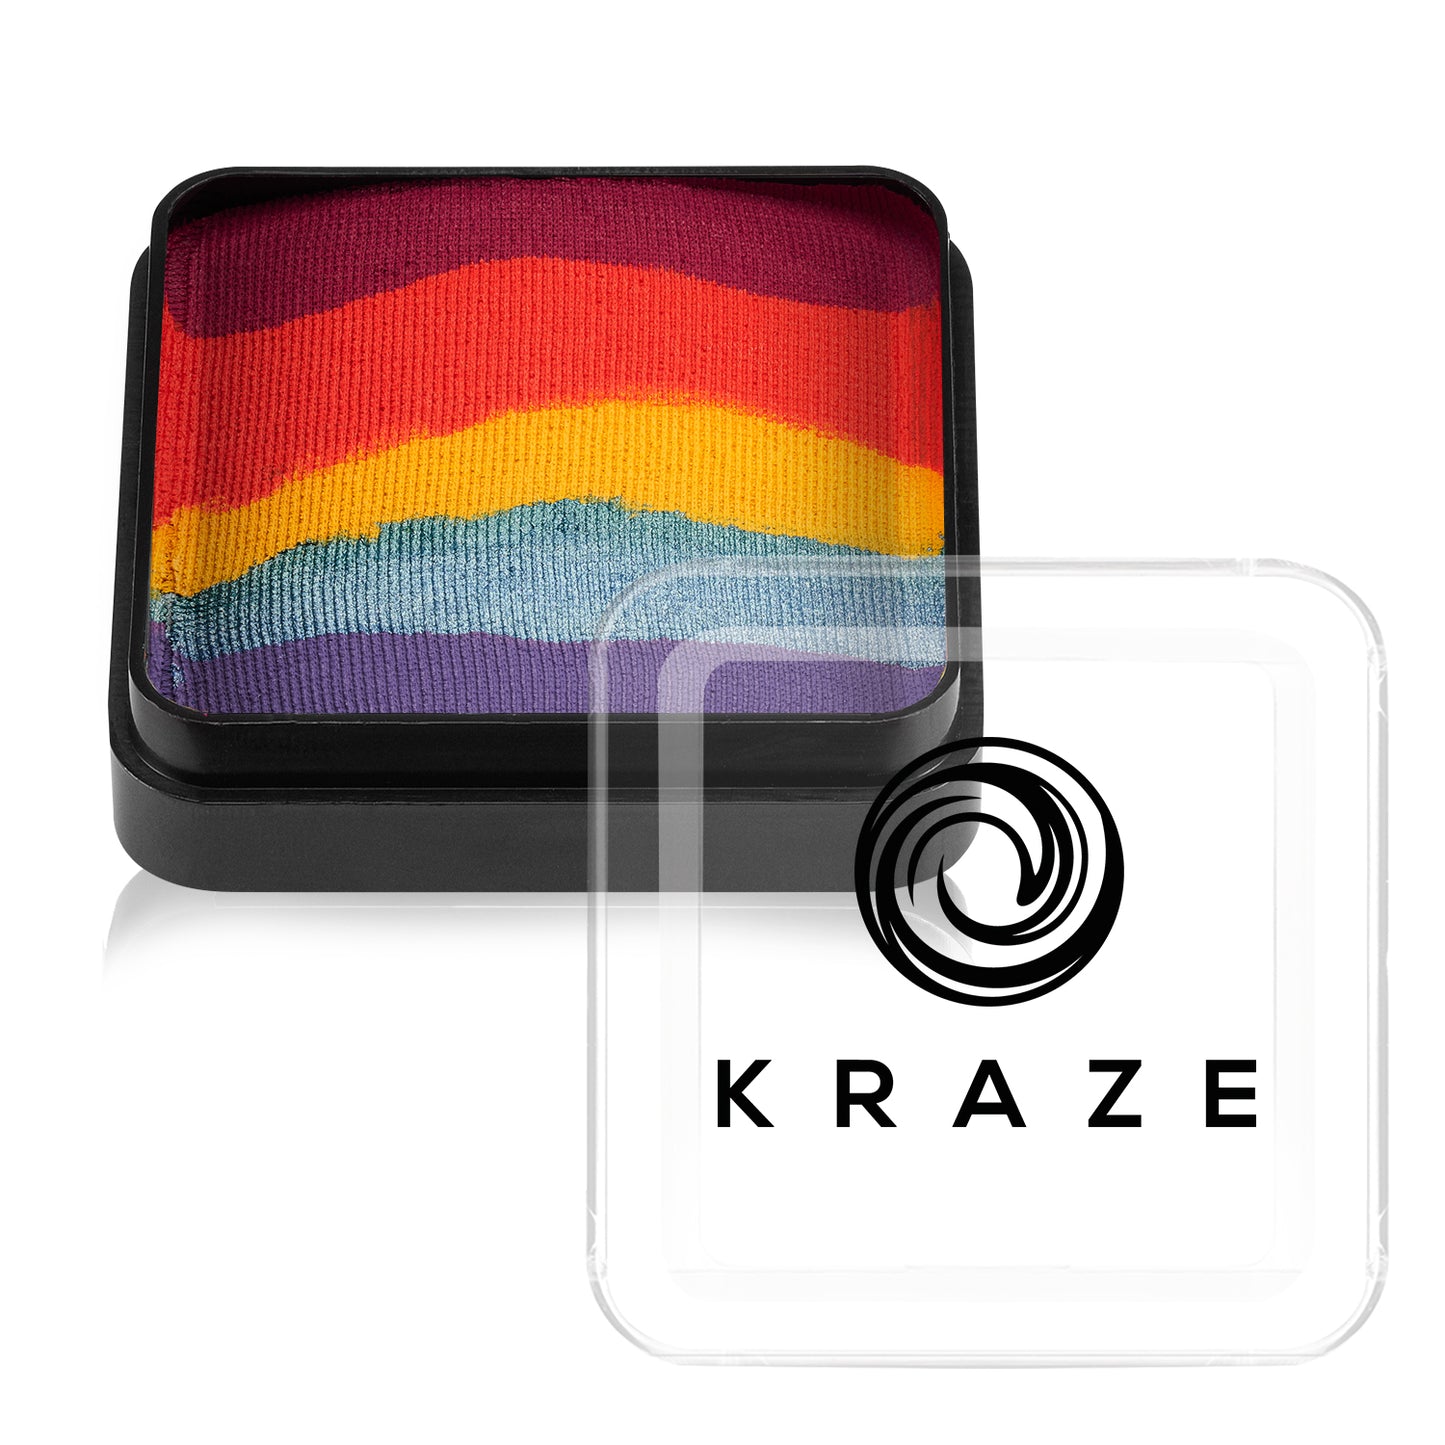 Kraze FX Domed Square Split Cake - Girly Girl Rainbow (25 gm)